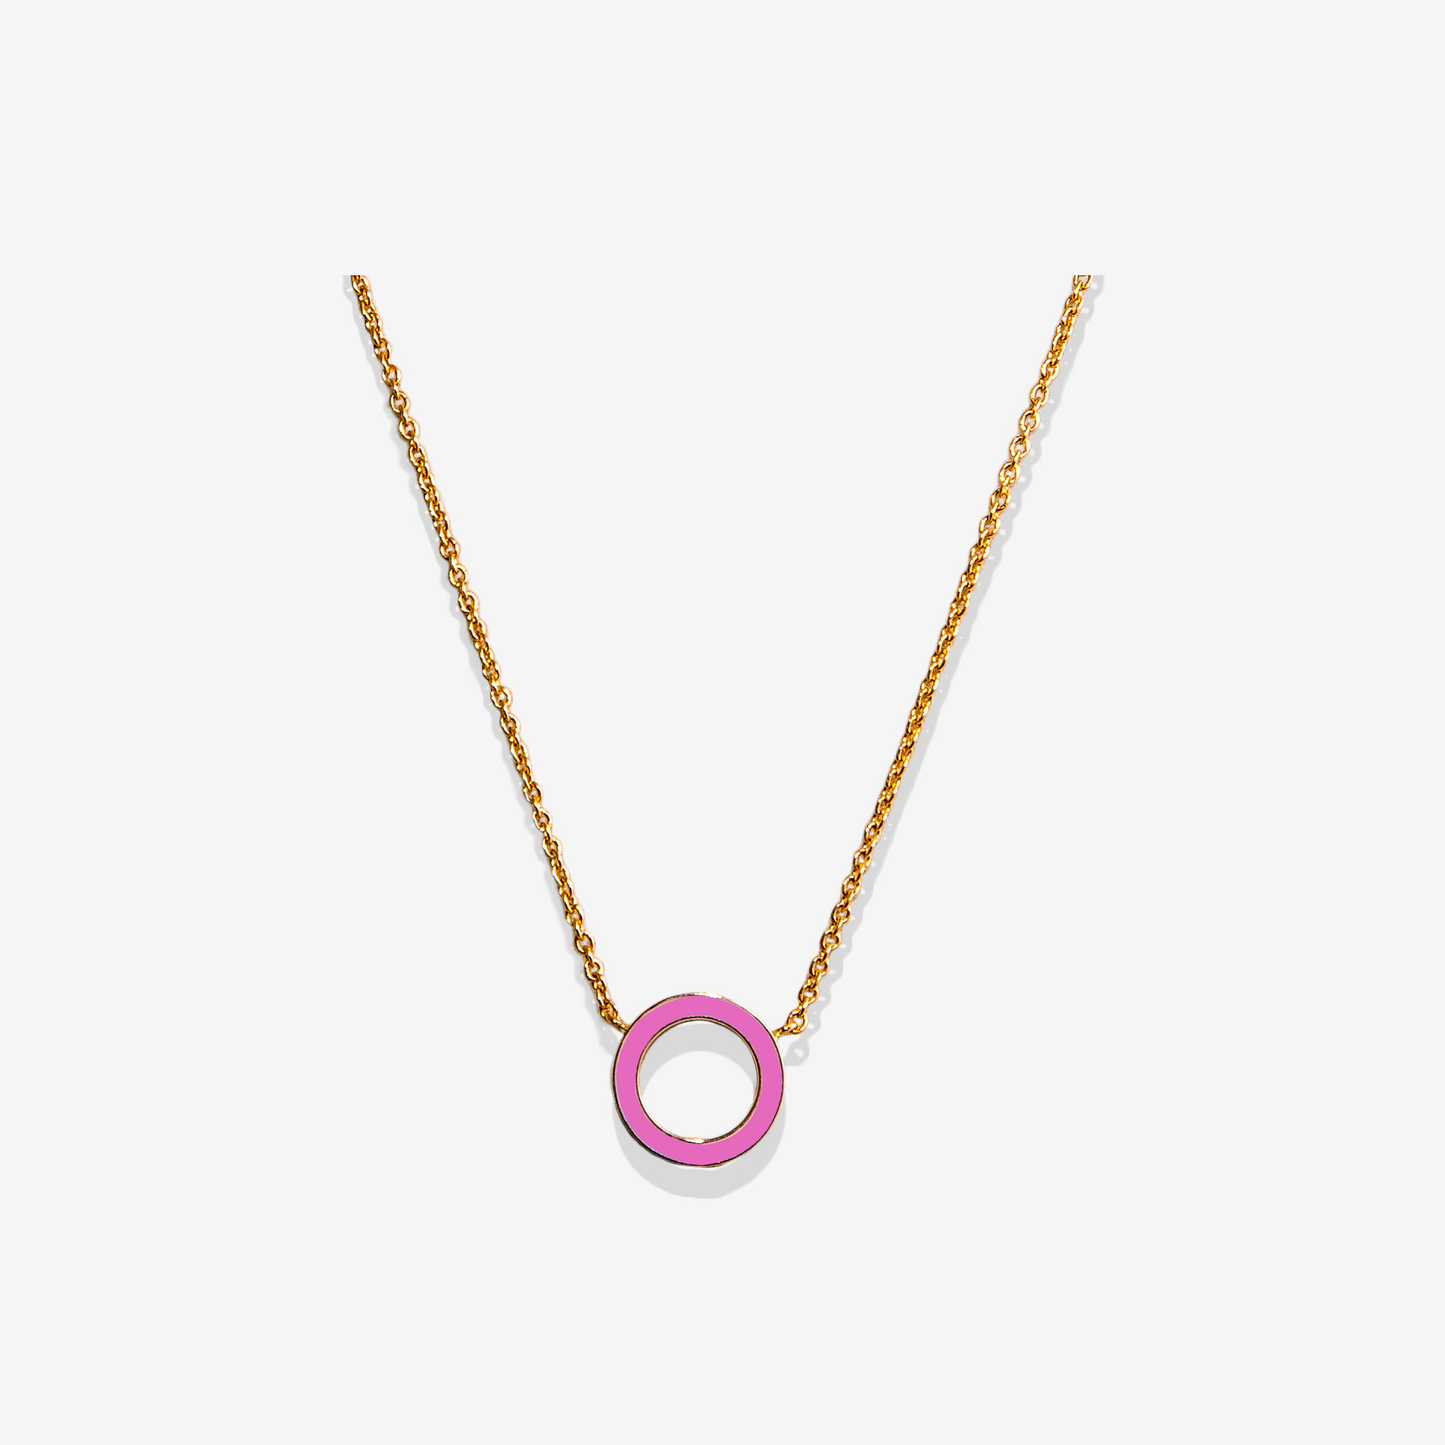 Inside light pink necklace